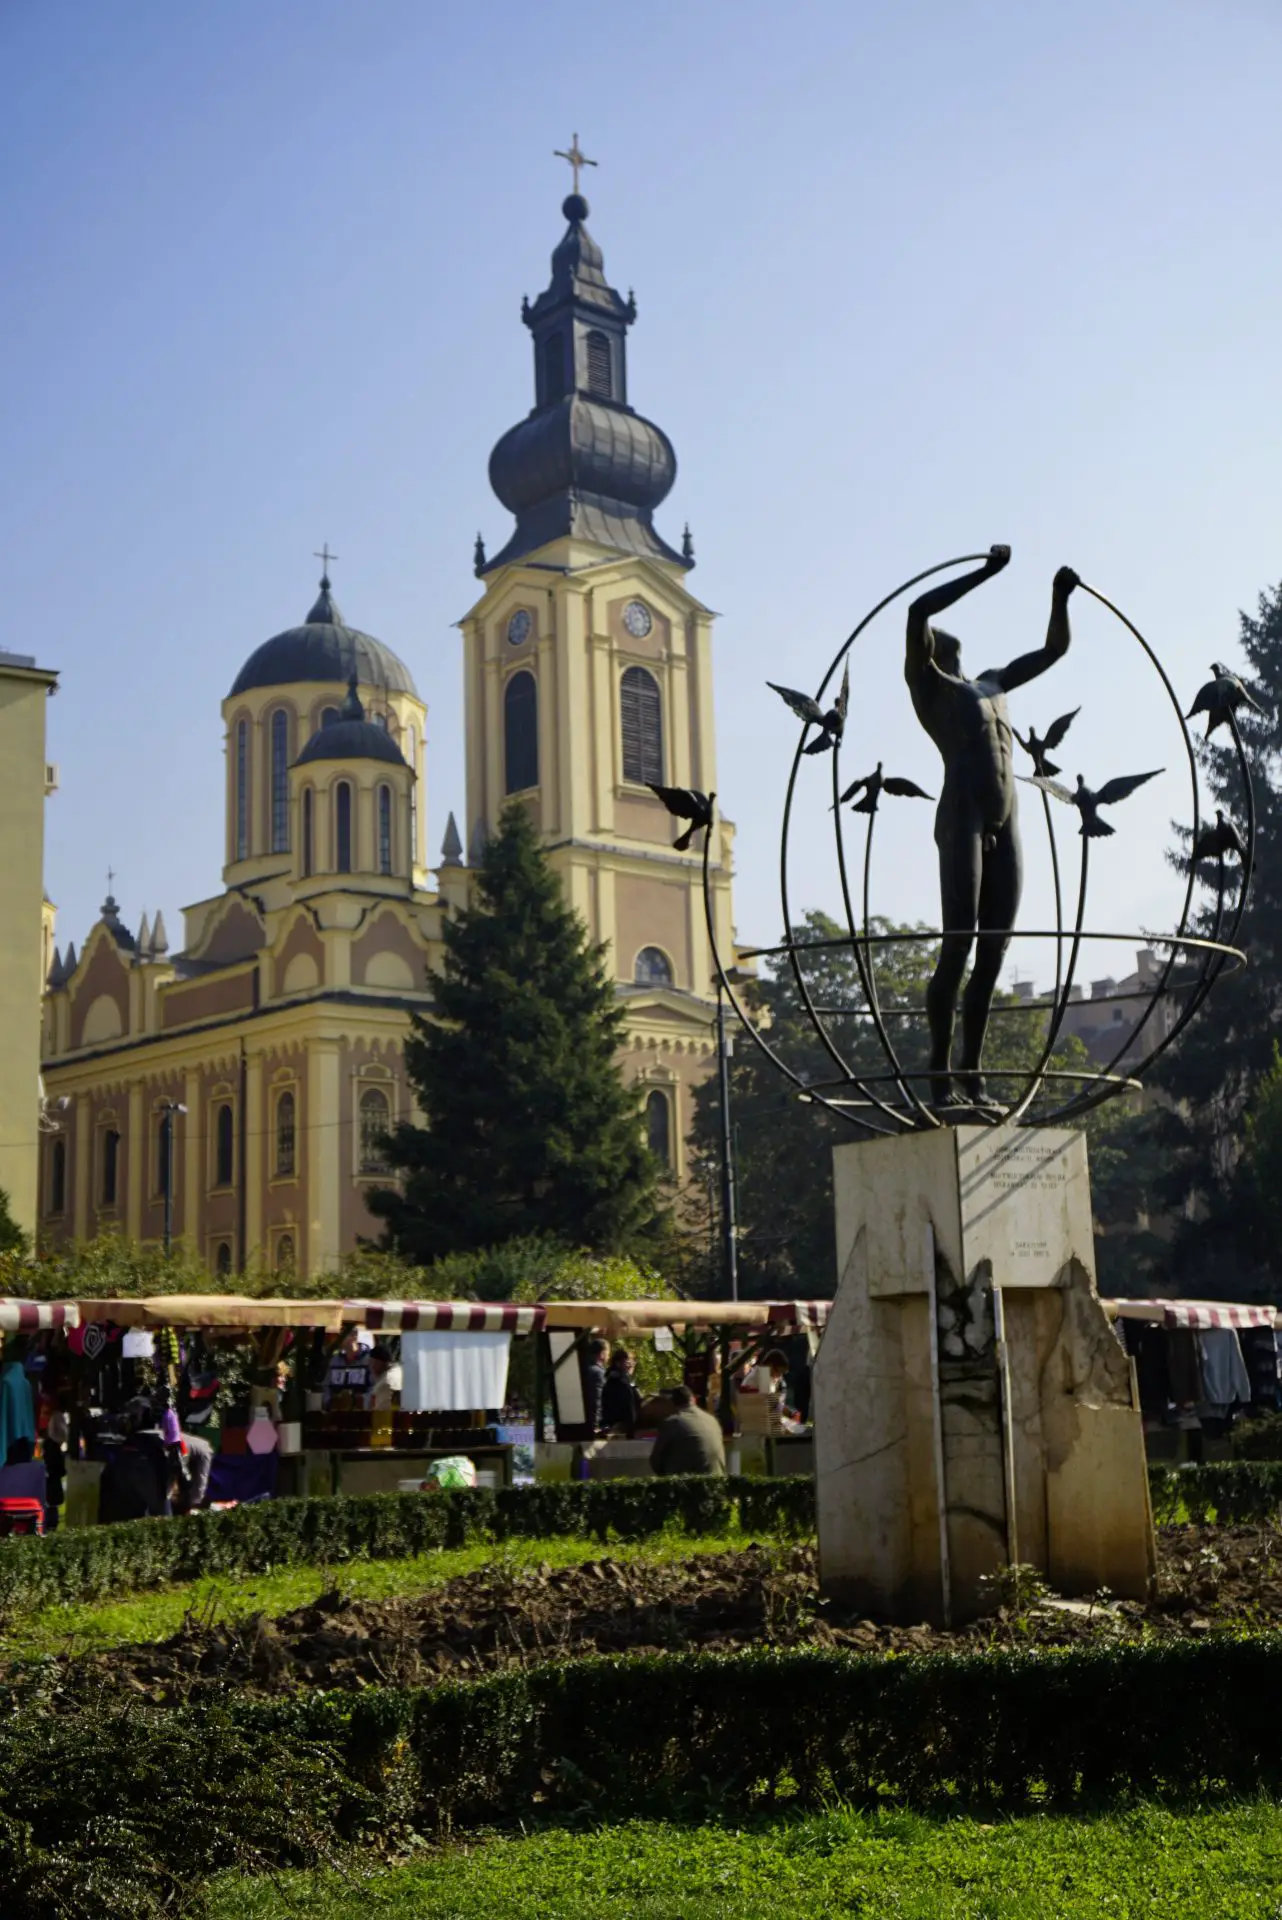 Liberation square, Sarajevo, Bosnia and Herzegovina - Experiencing the Globe